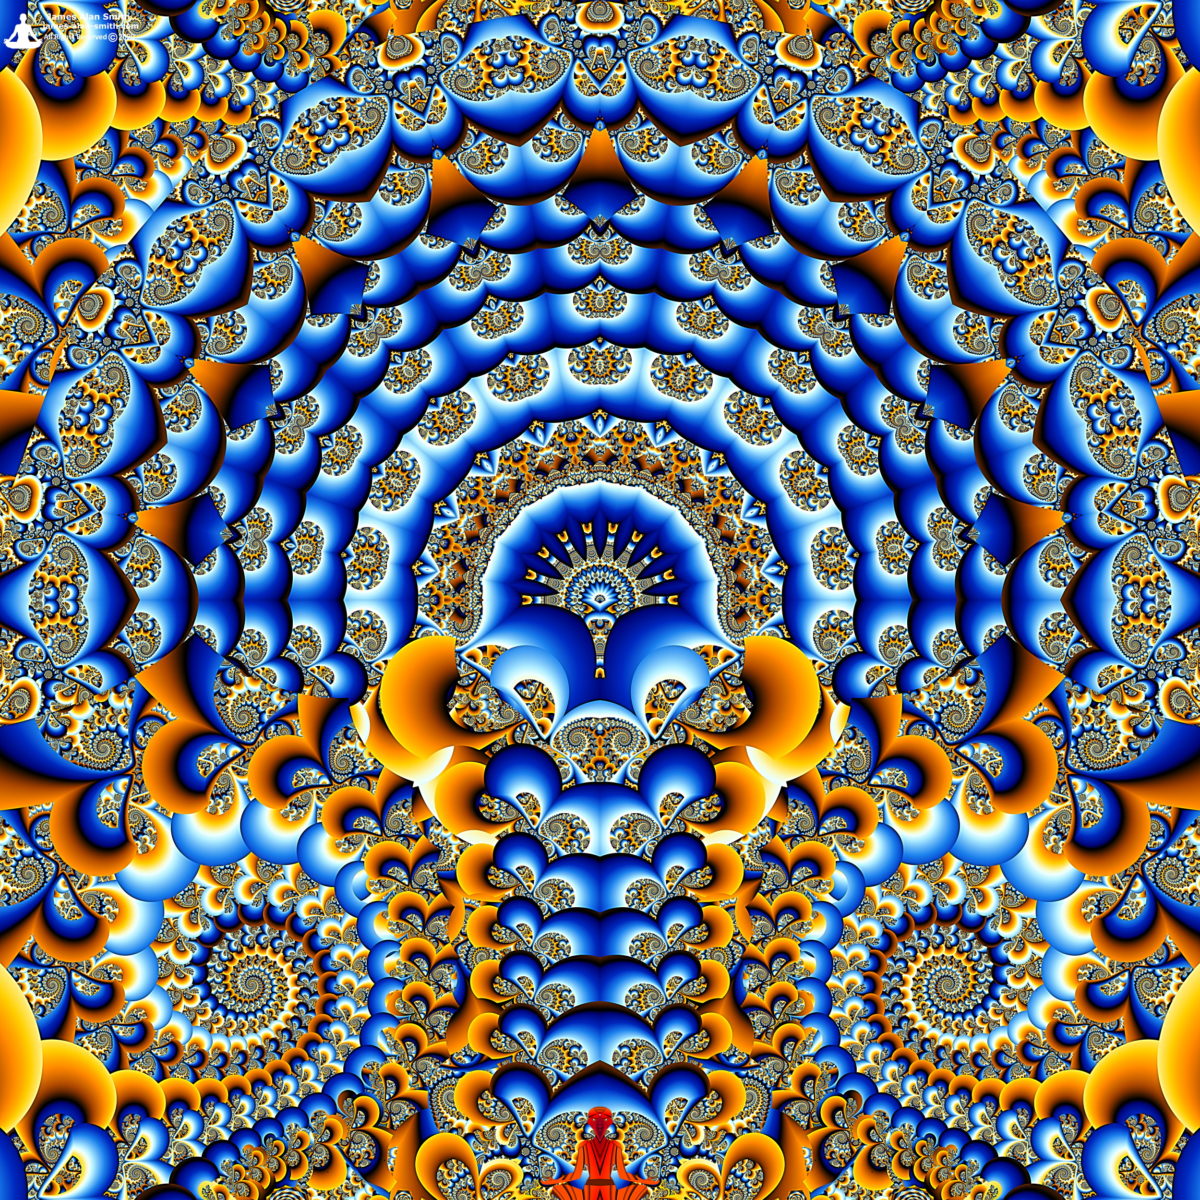 Meditations on metamorphosis under the tree of fractals: Artwork by James Alan Smith